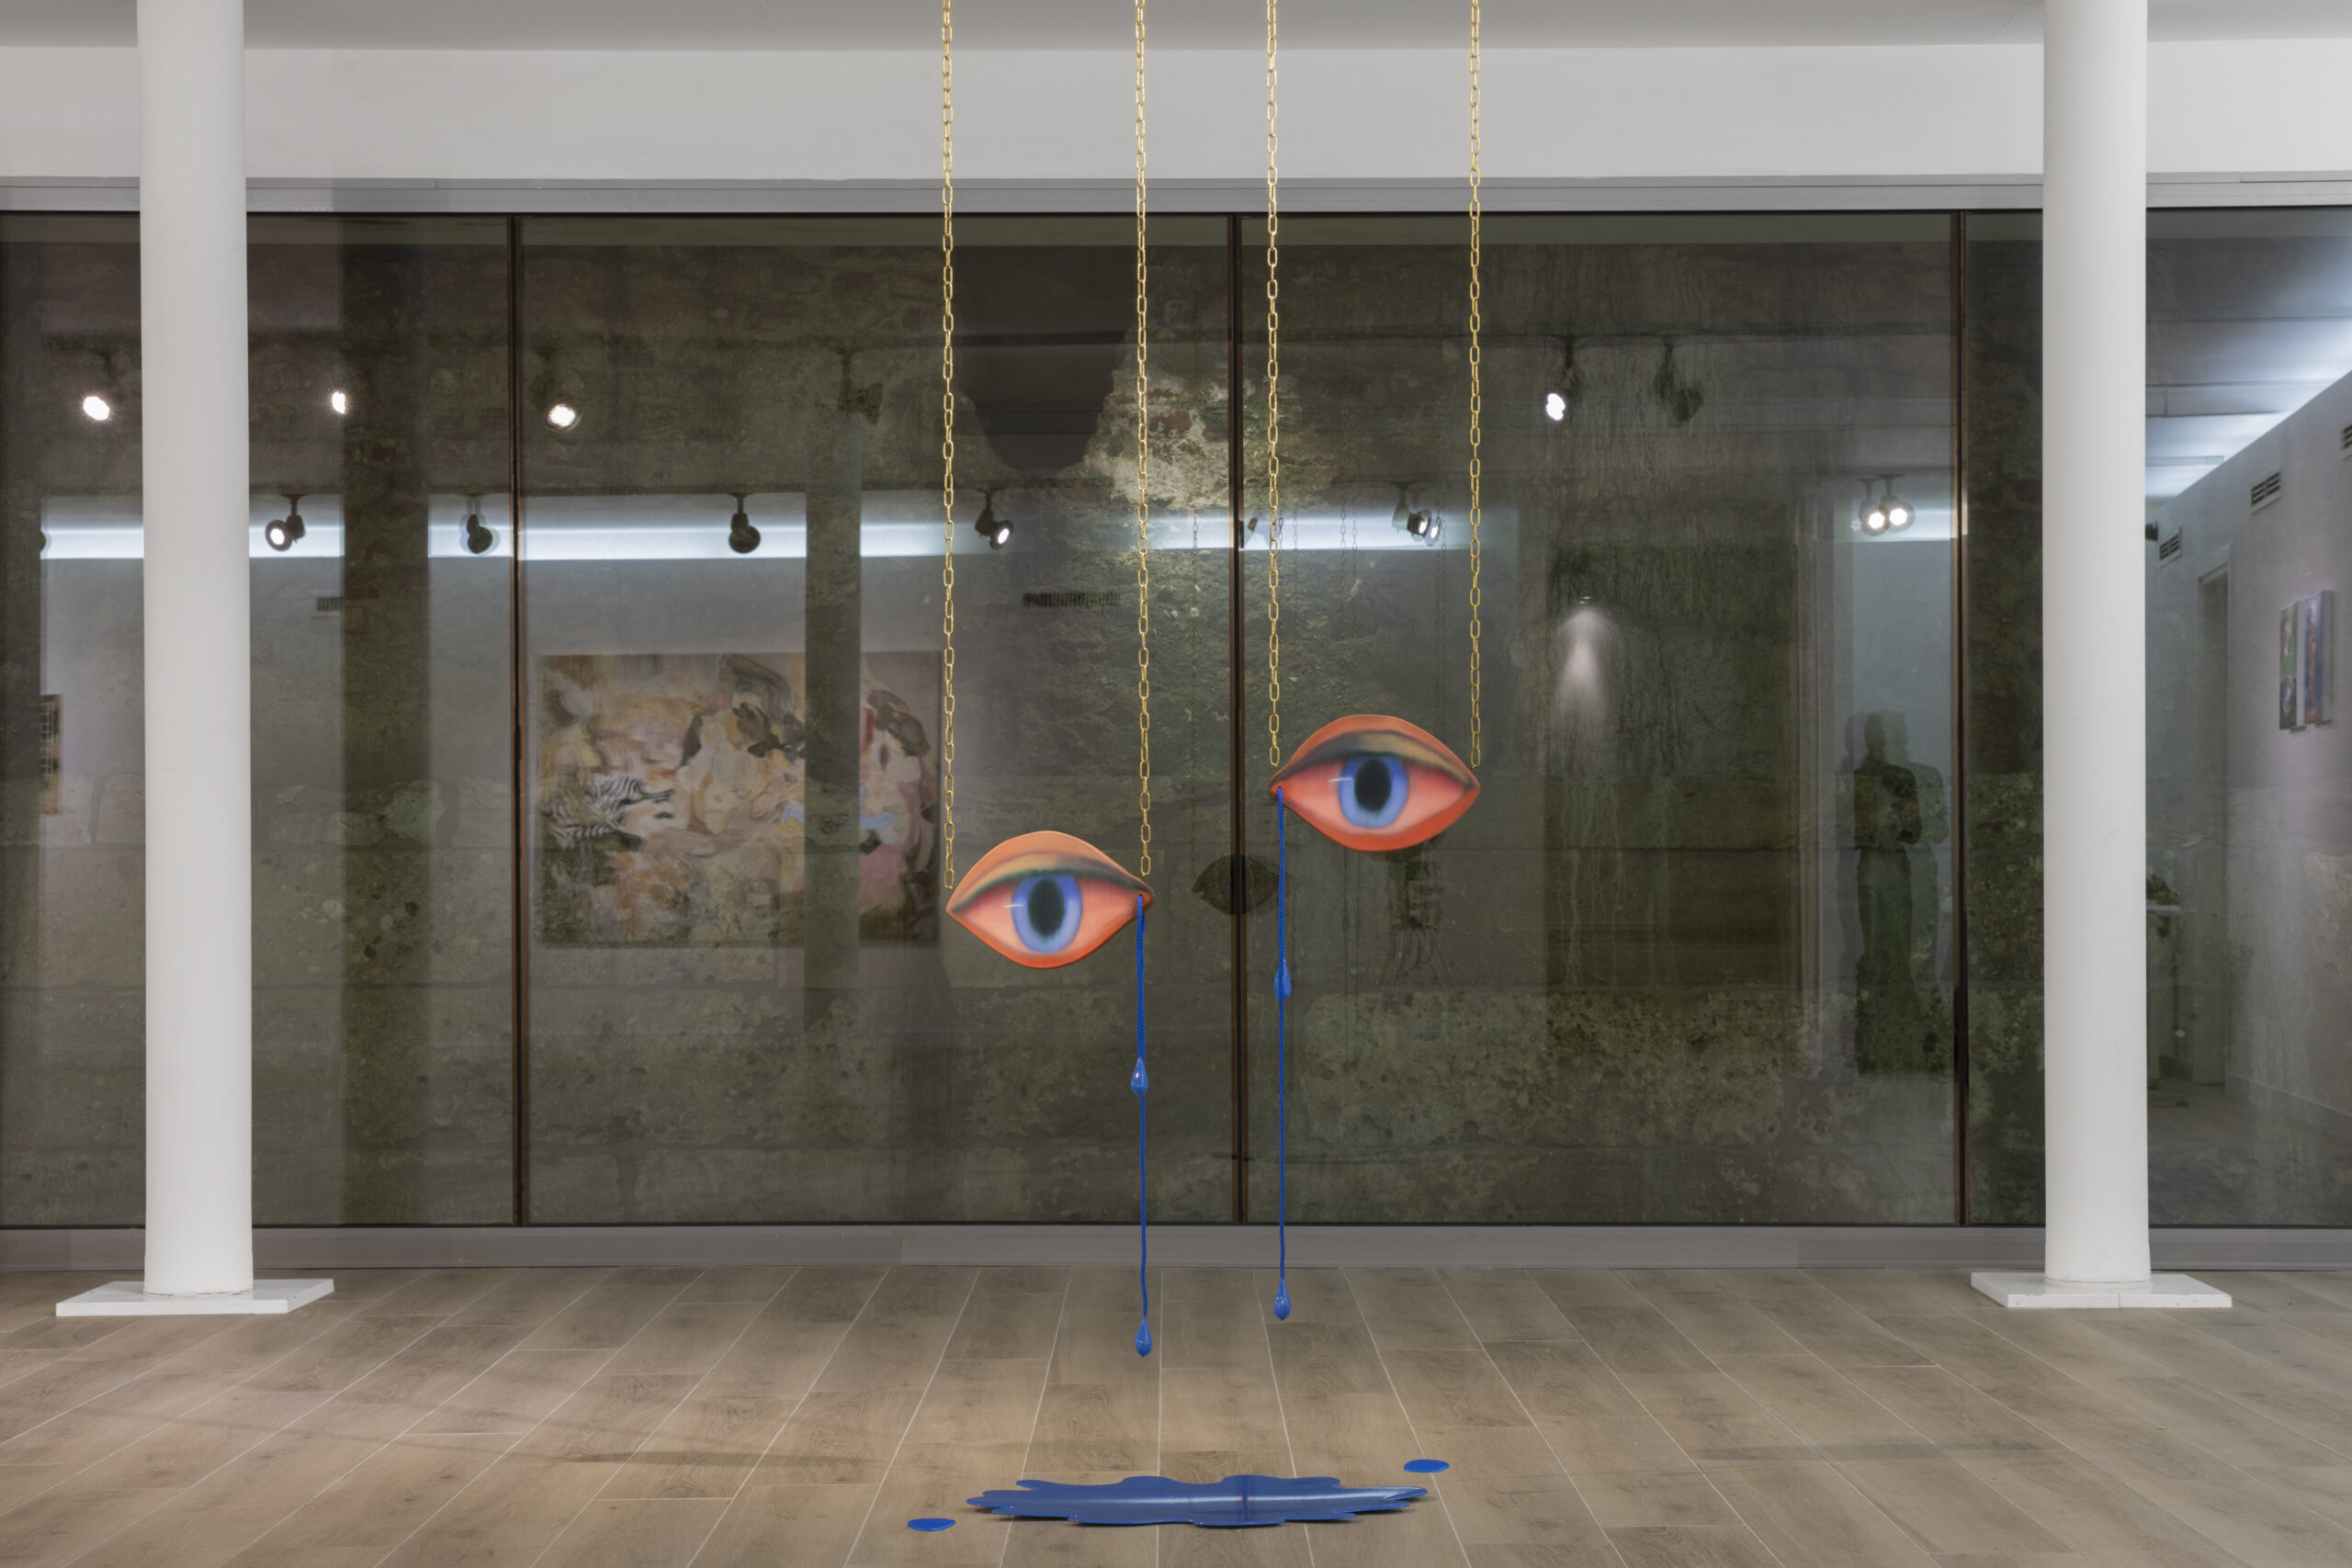 Ivana De Vivanco, Falling eyes, 2021, oil on wood, resin, cords, cement, metallic chains, 280 x 80 x 47cm